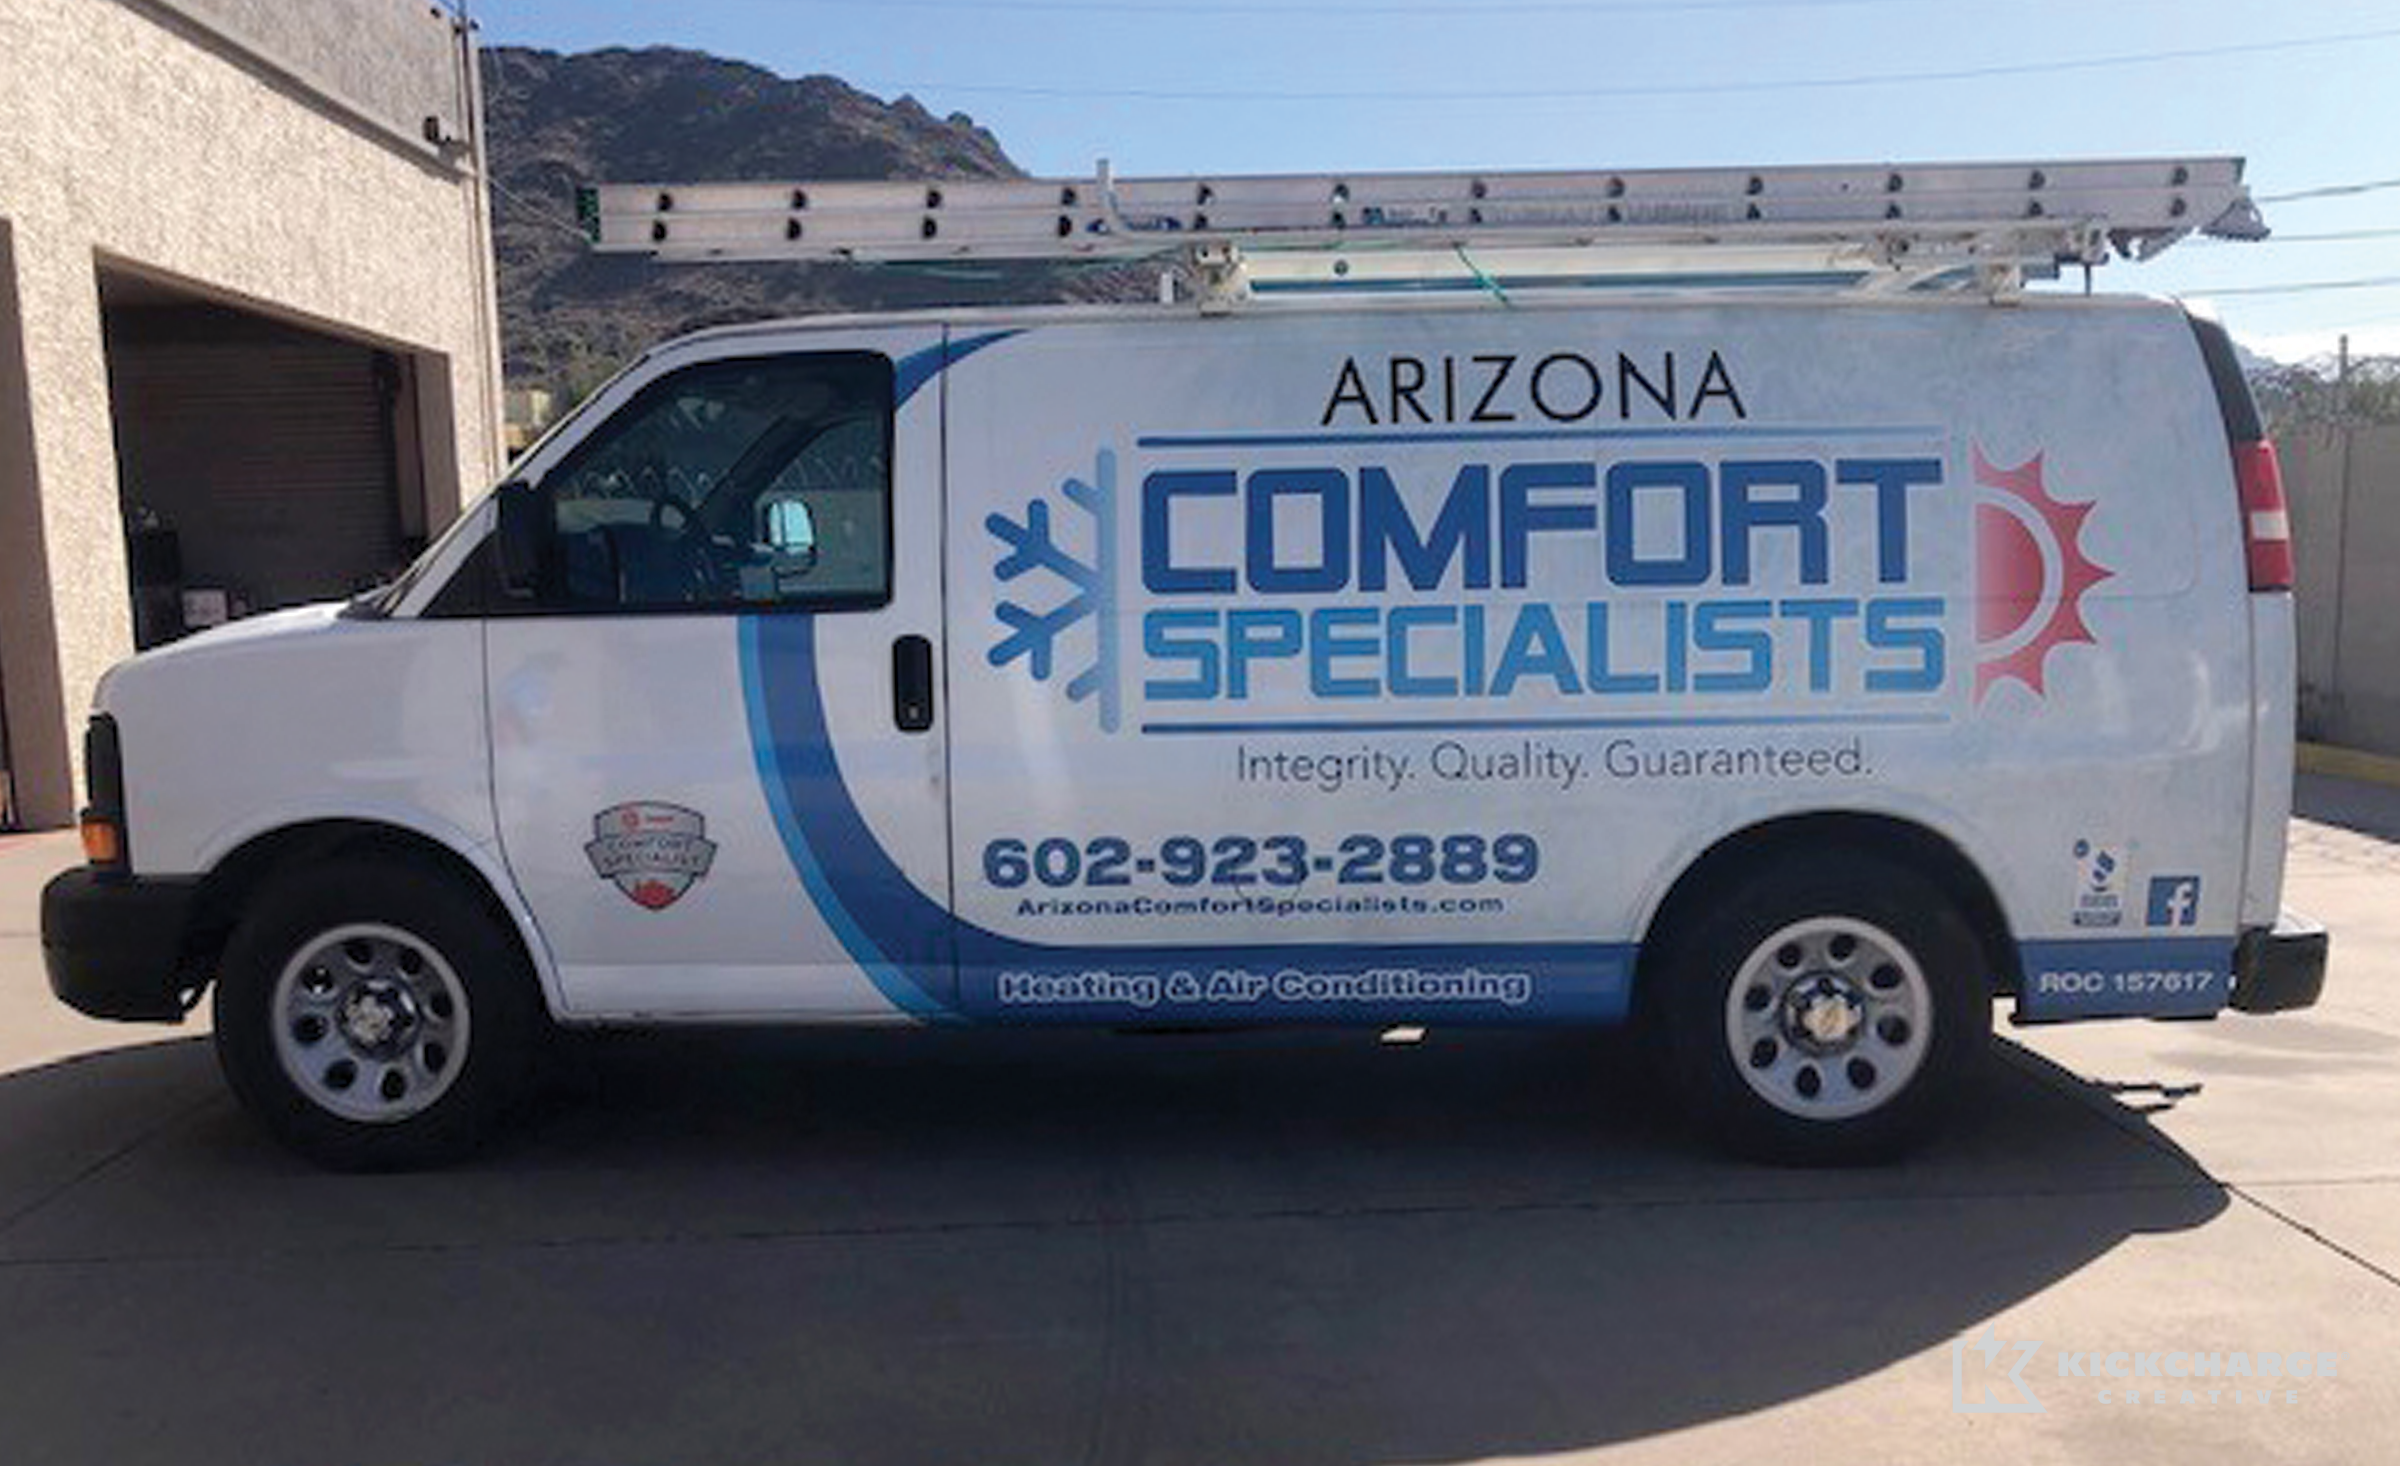 Arizona Comfort Specialists